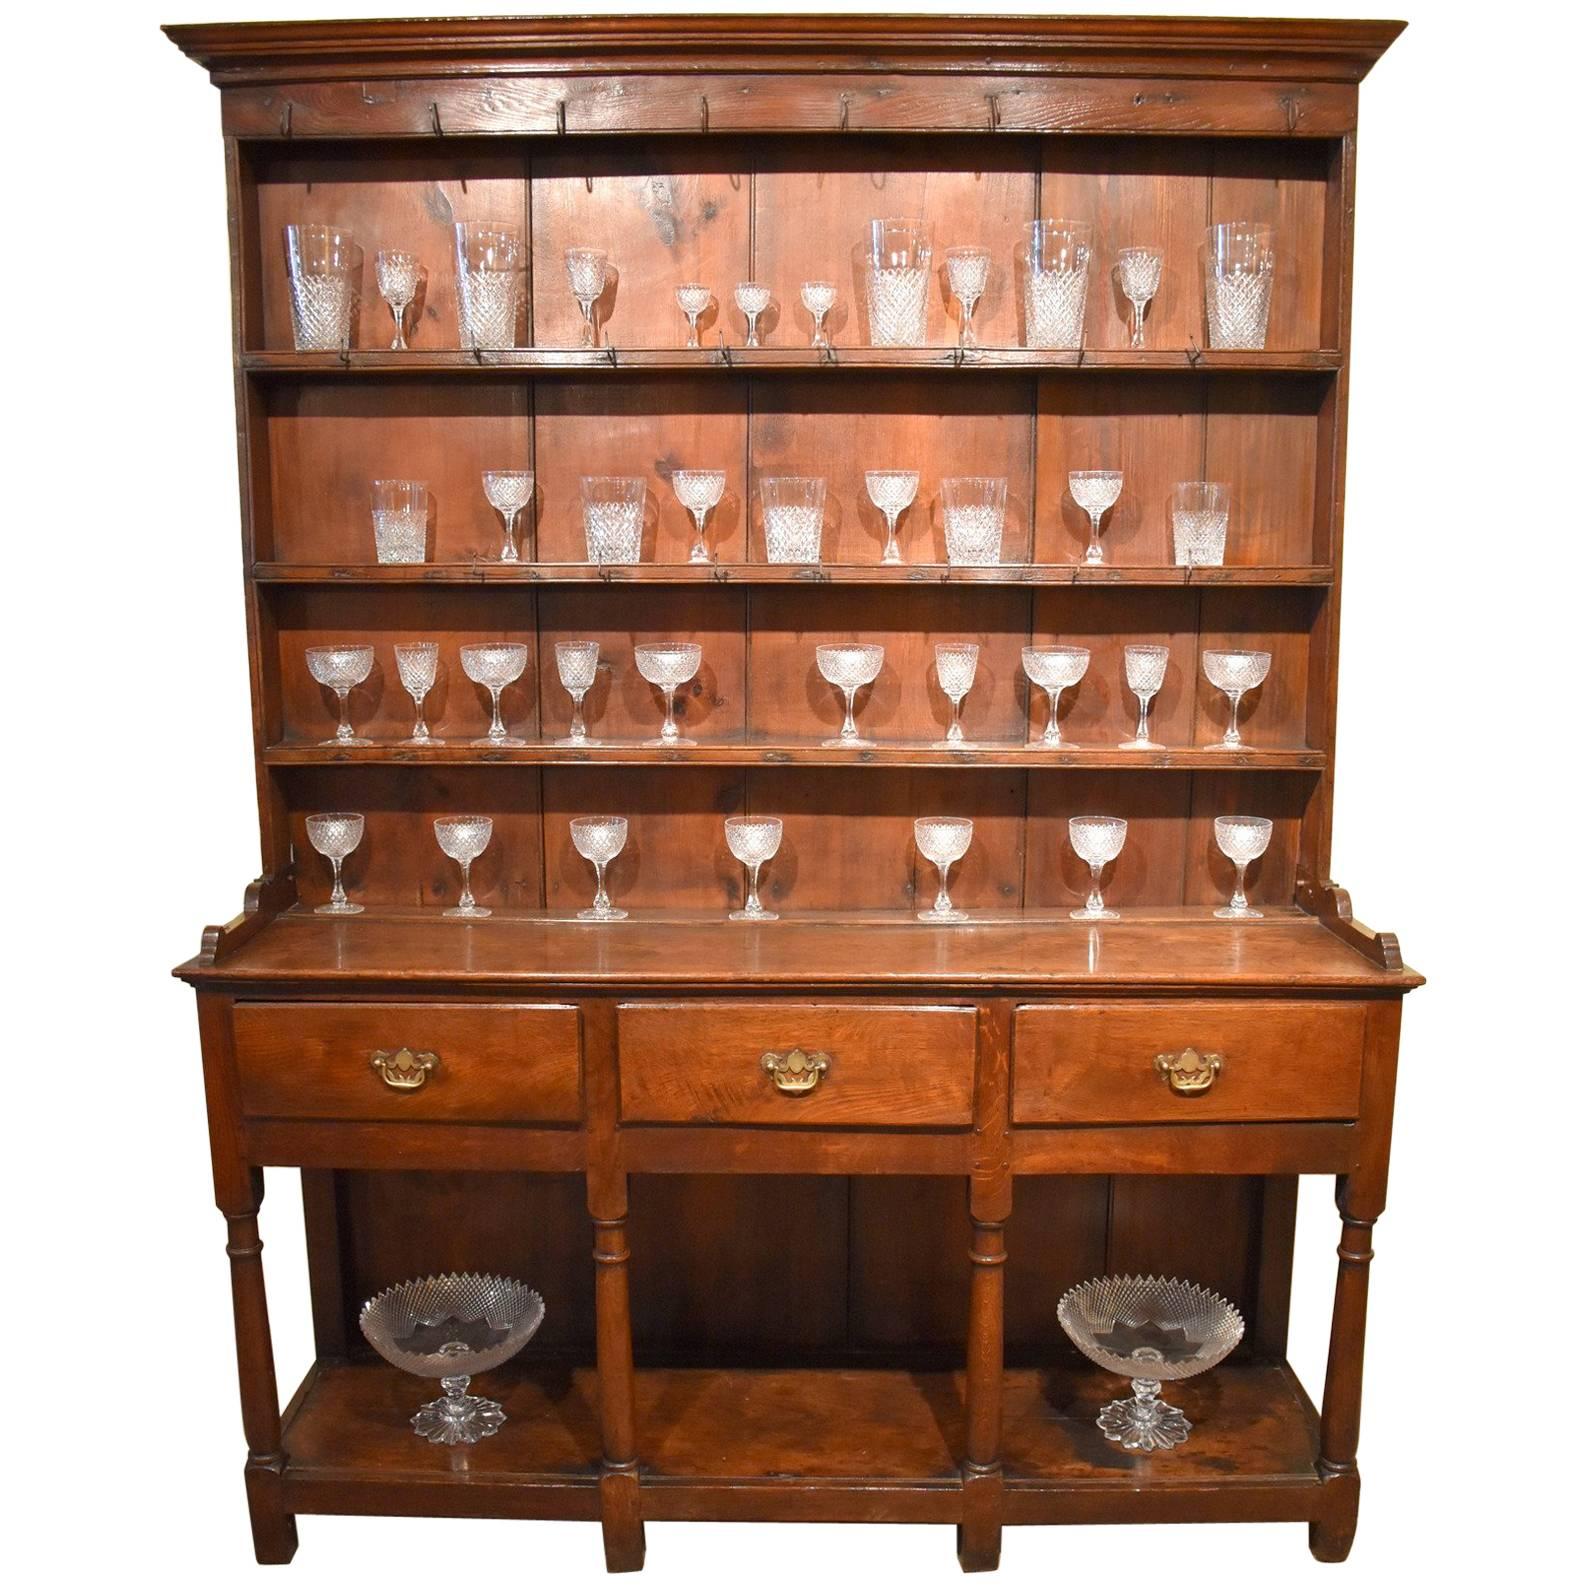 Attractive Early 19th Century Oak Dresser